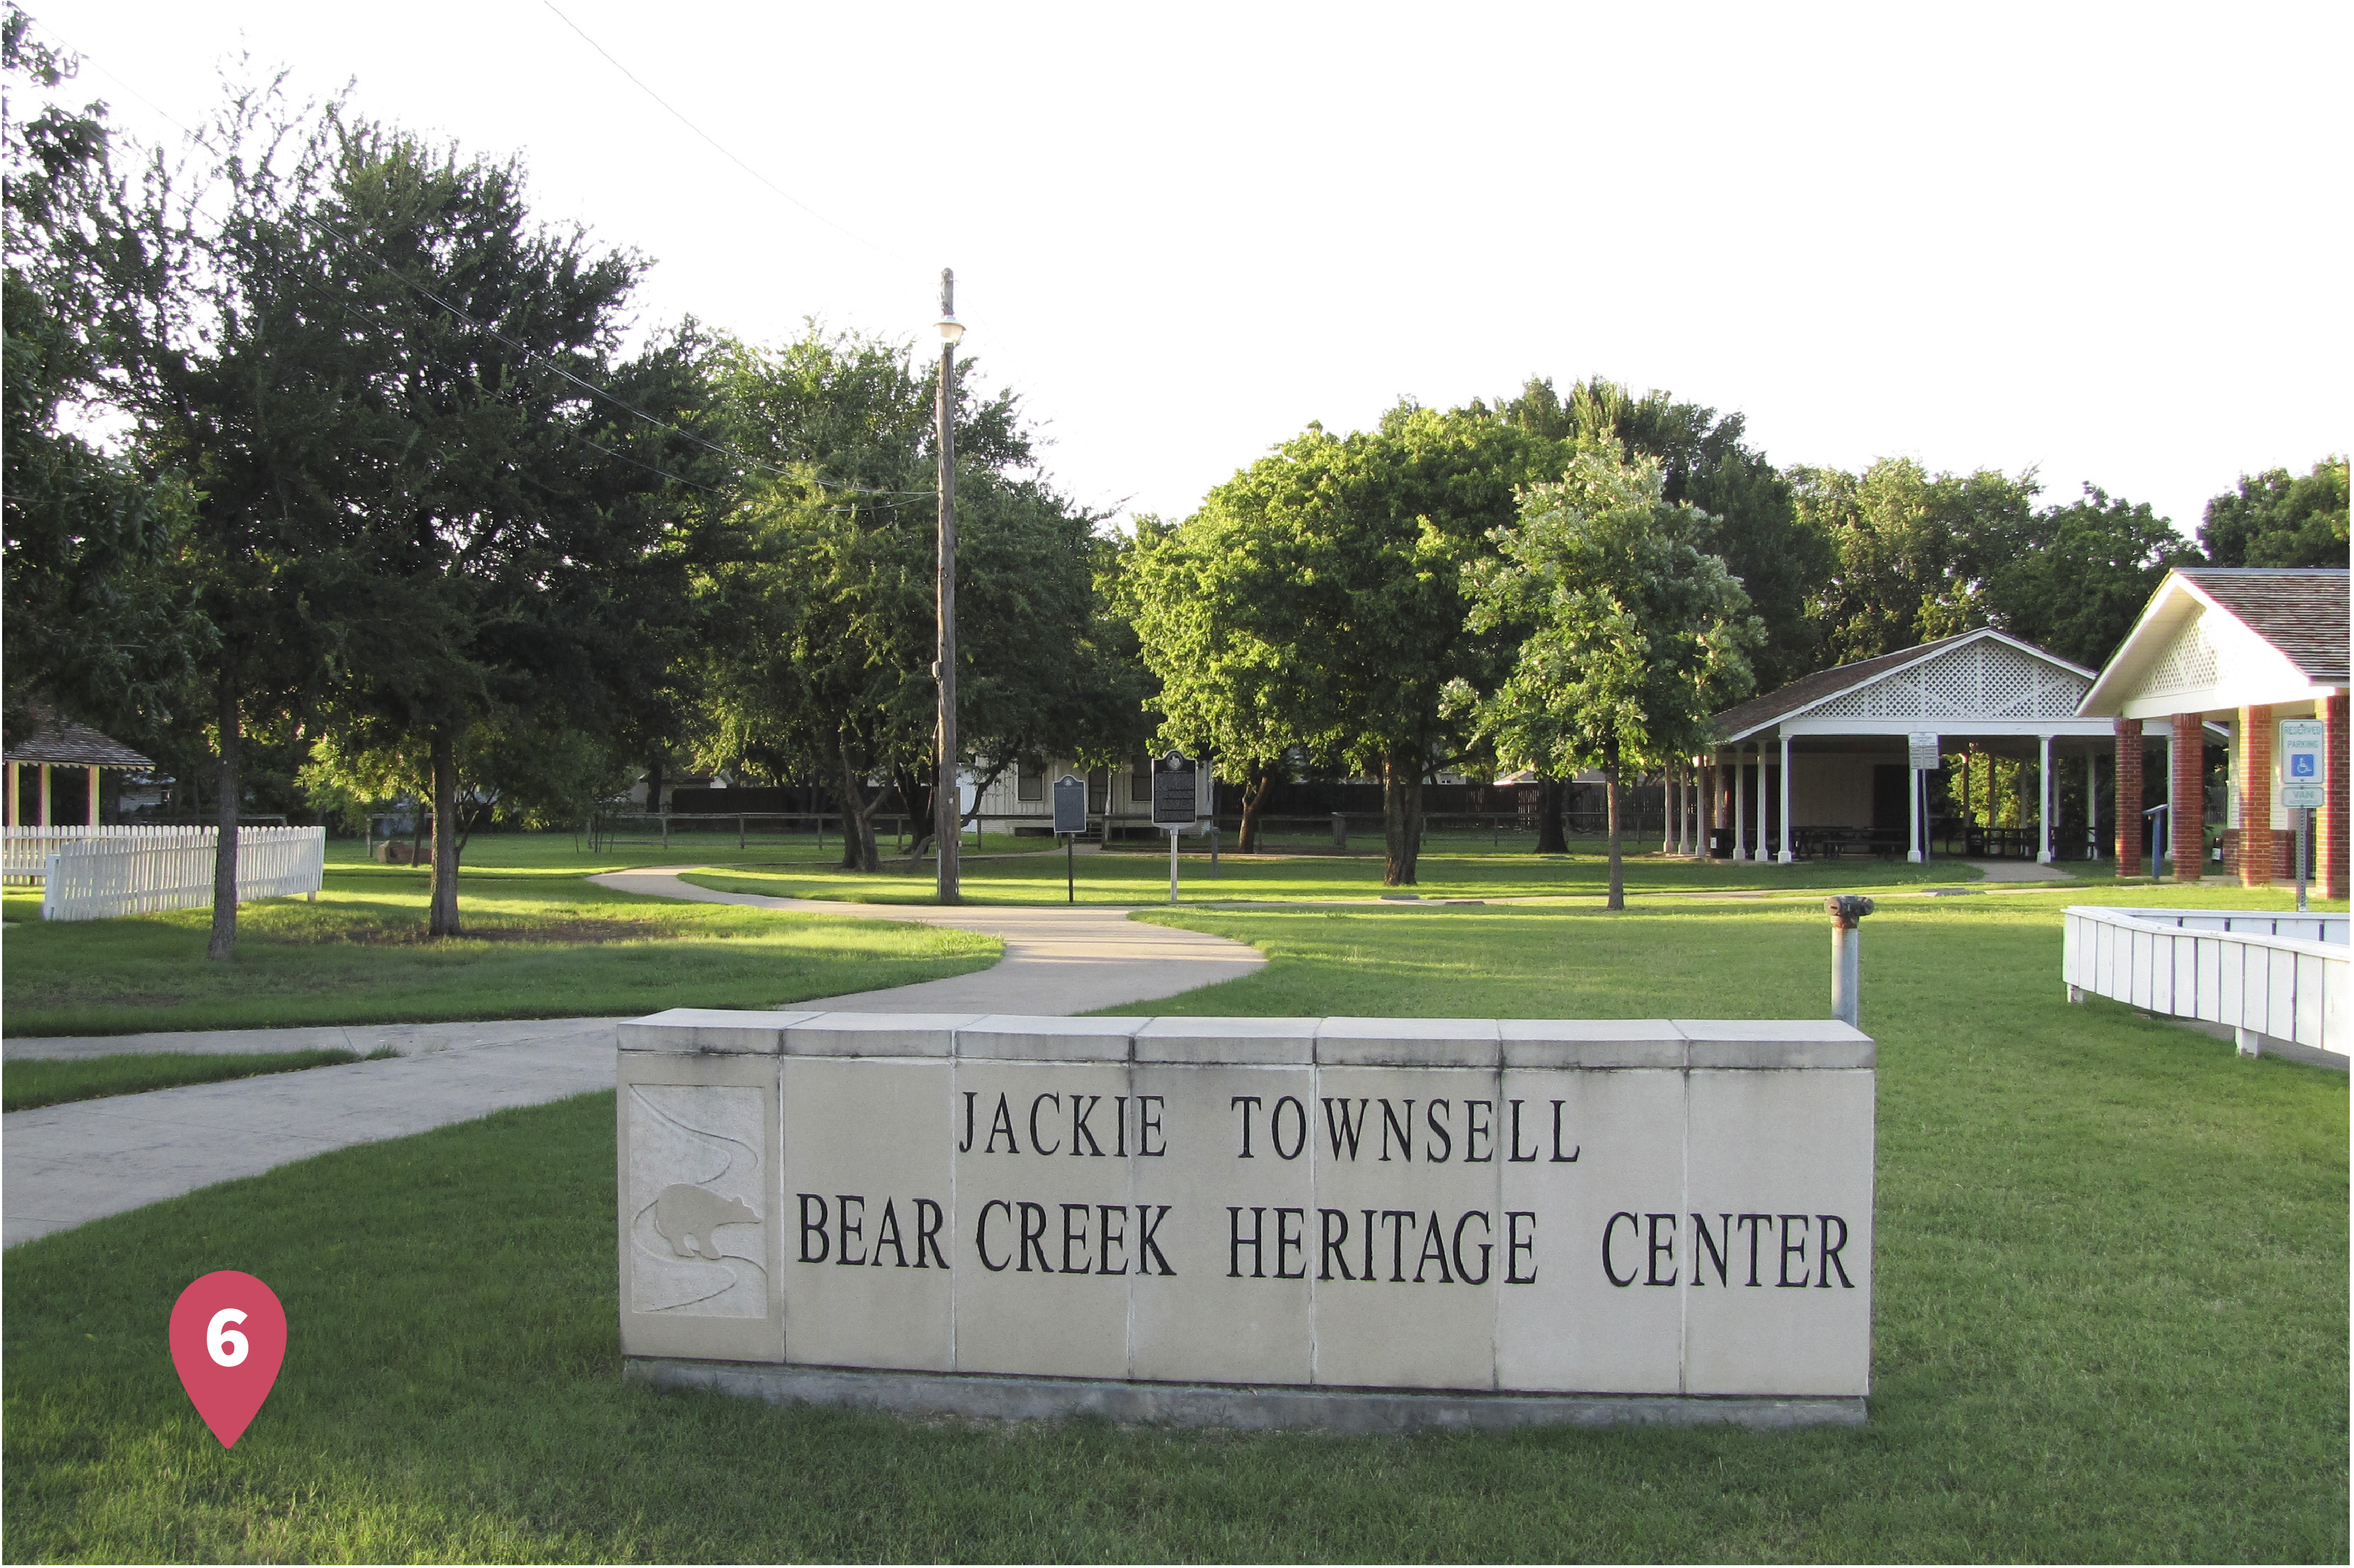 Jackie Townsell Bear Creek Heritage Center